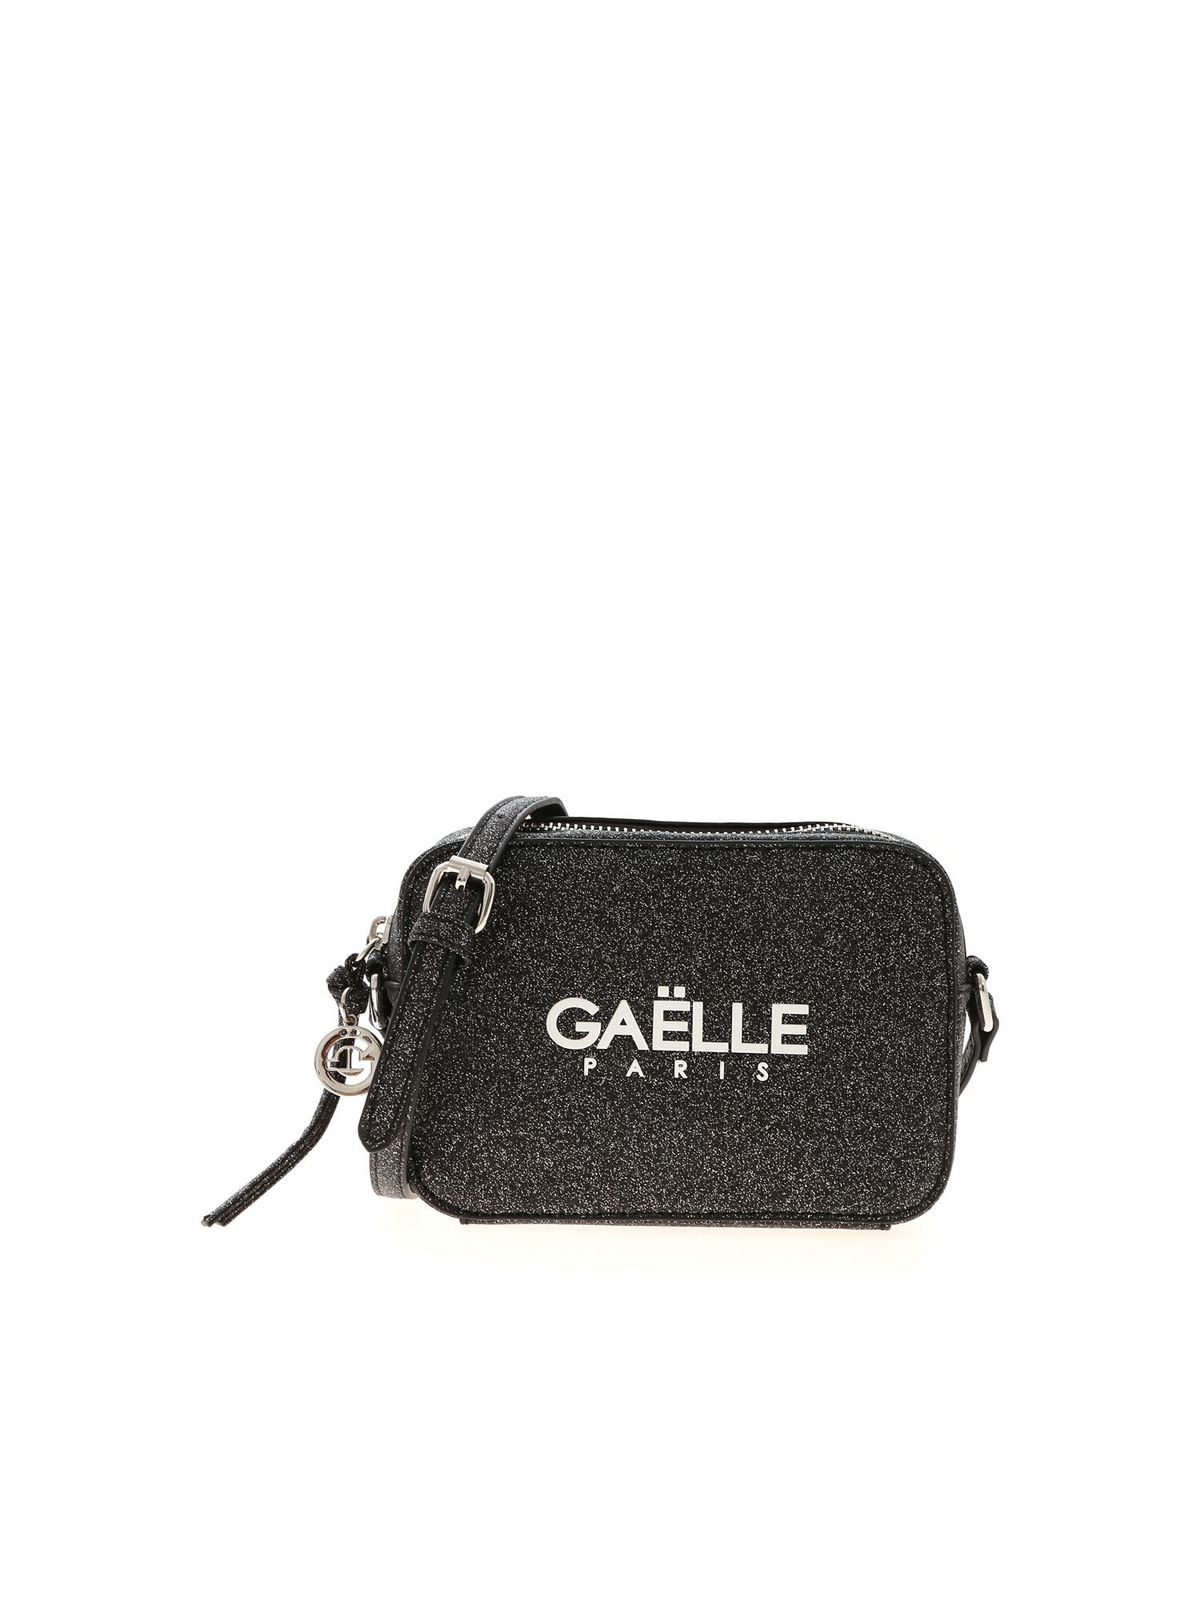 Cross body bags Gaelle Paris - Black glitter shoulder bag - GBDA2506NERO